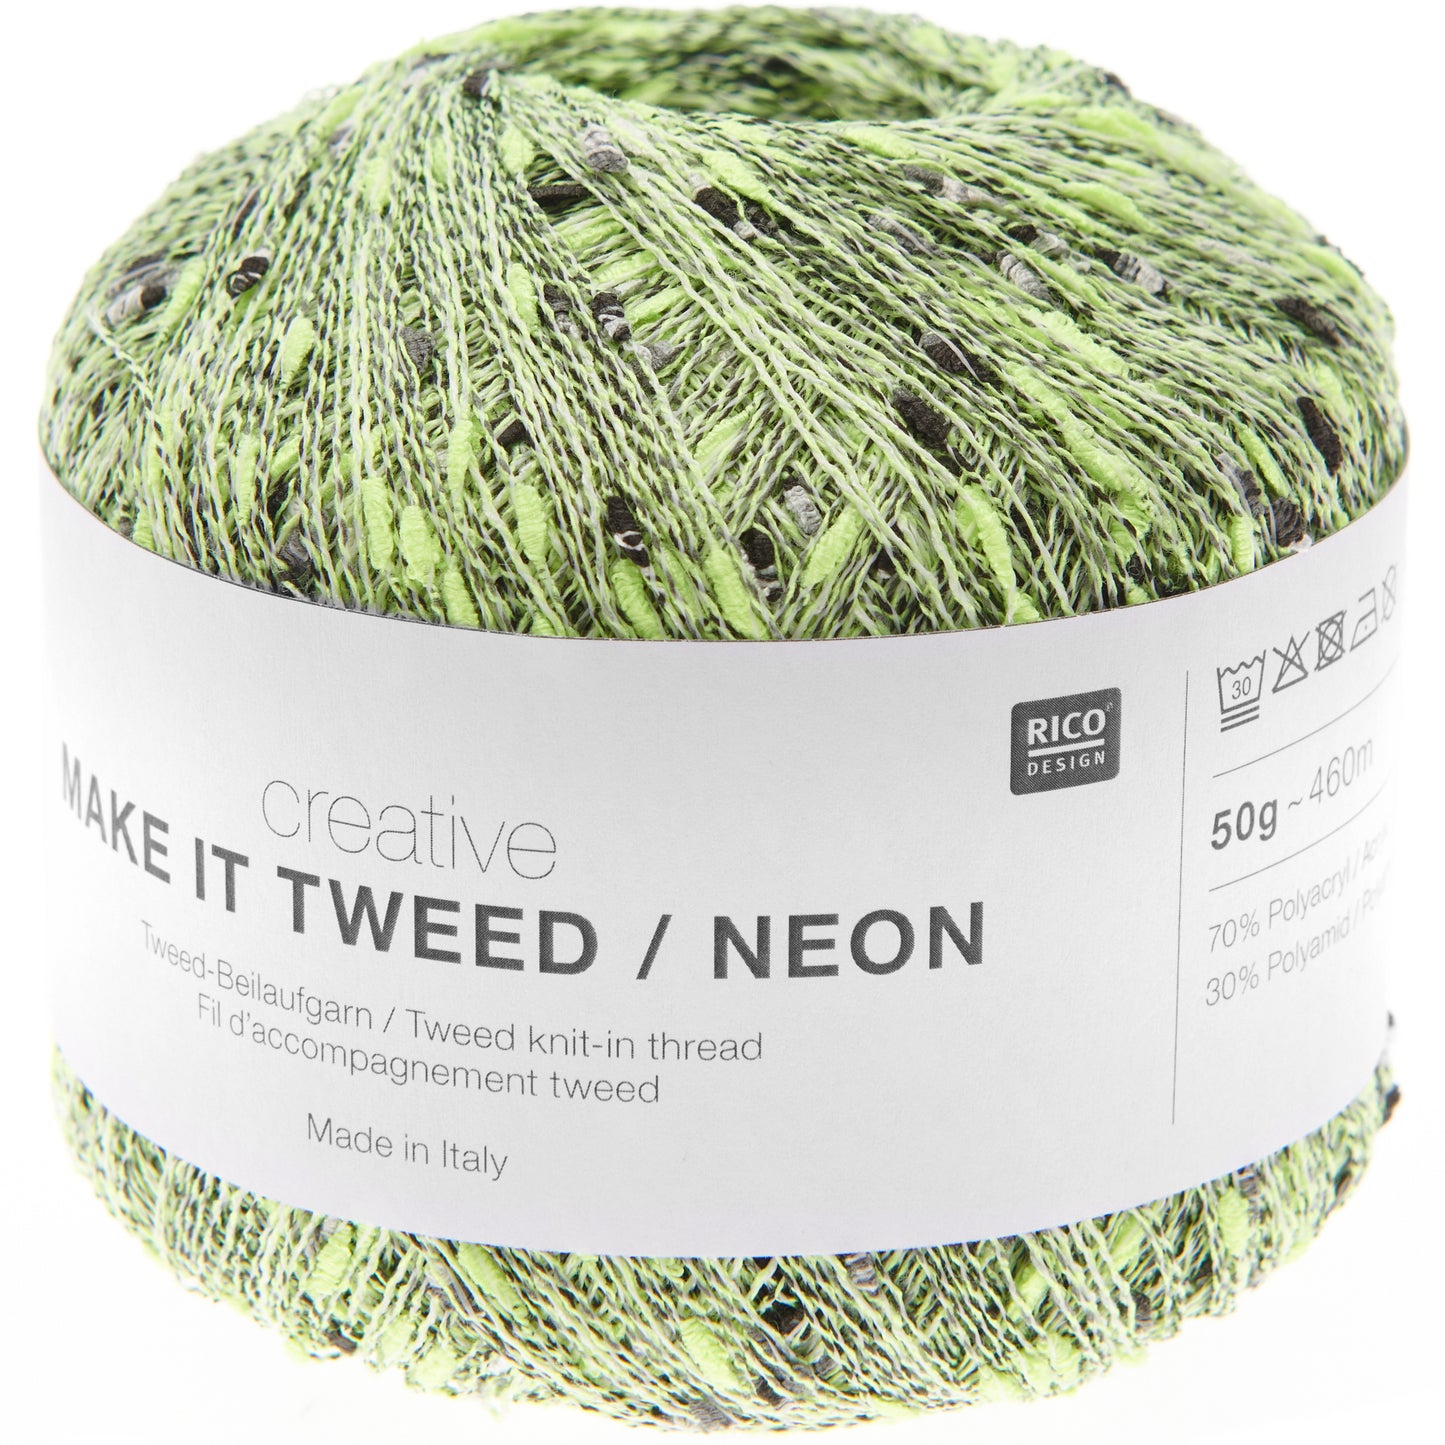 Make it Tweed - Neon gulur